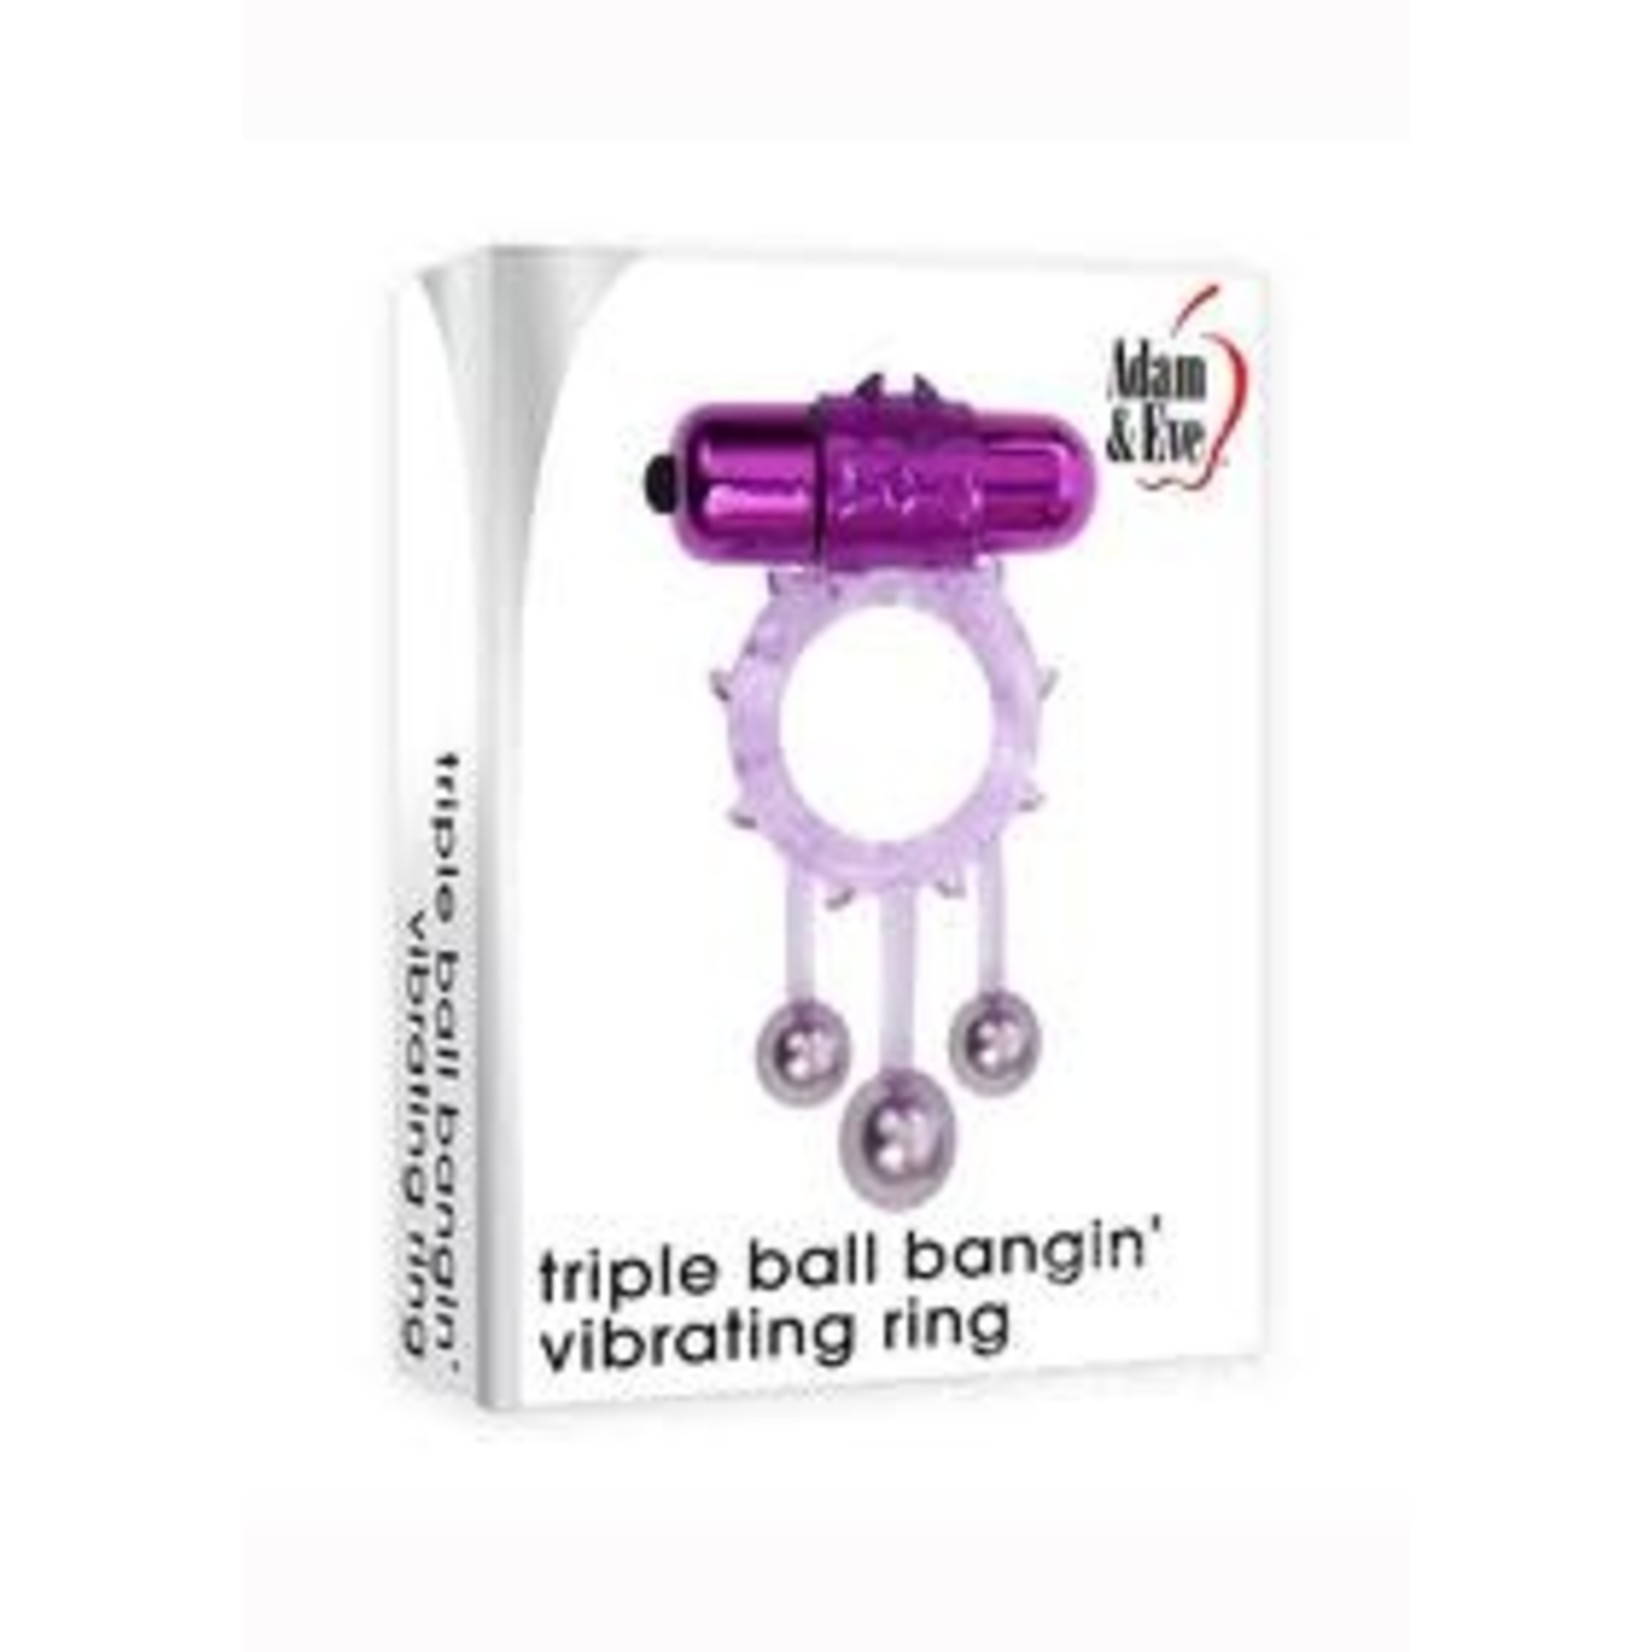 Adam & Eve's Triple Ball Bangin' Vibrating Ring - Purple